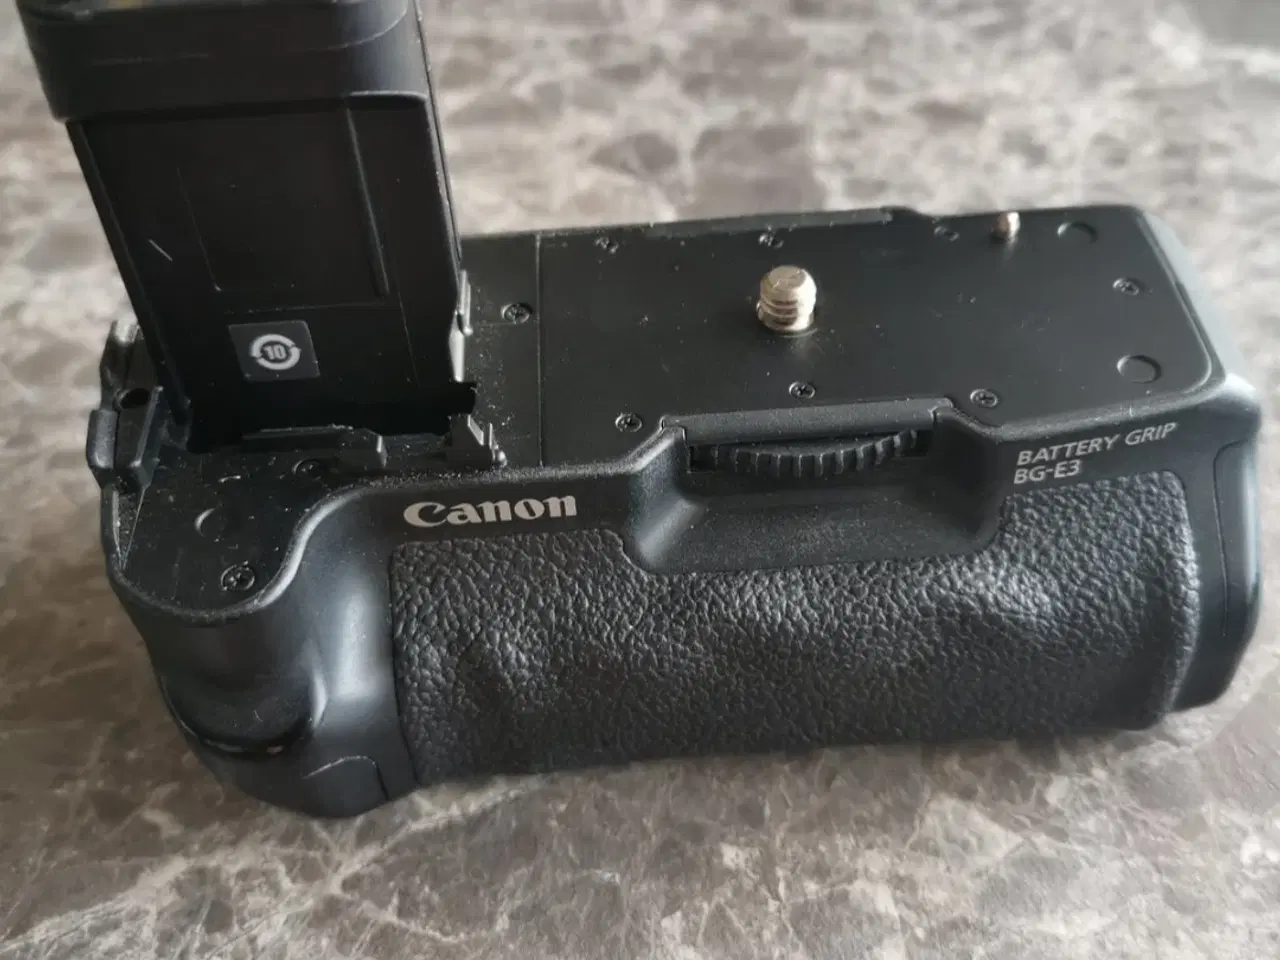 Billede 1 - Canon batteri greb.